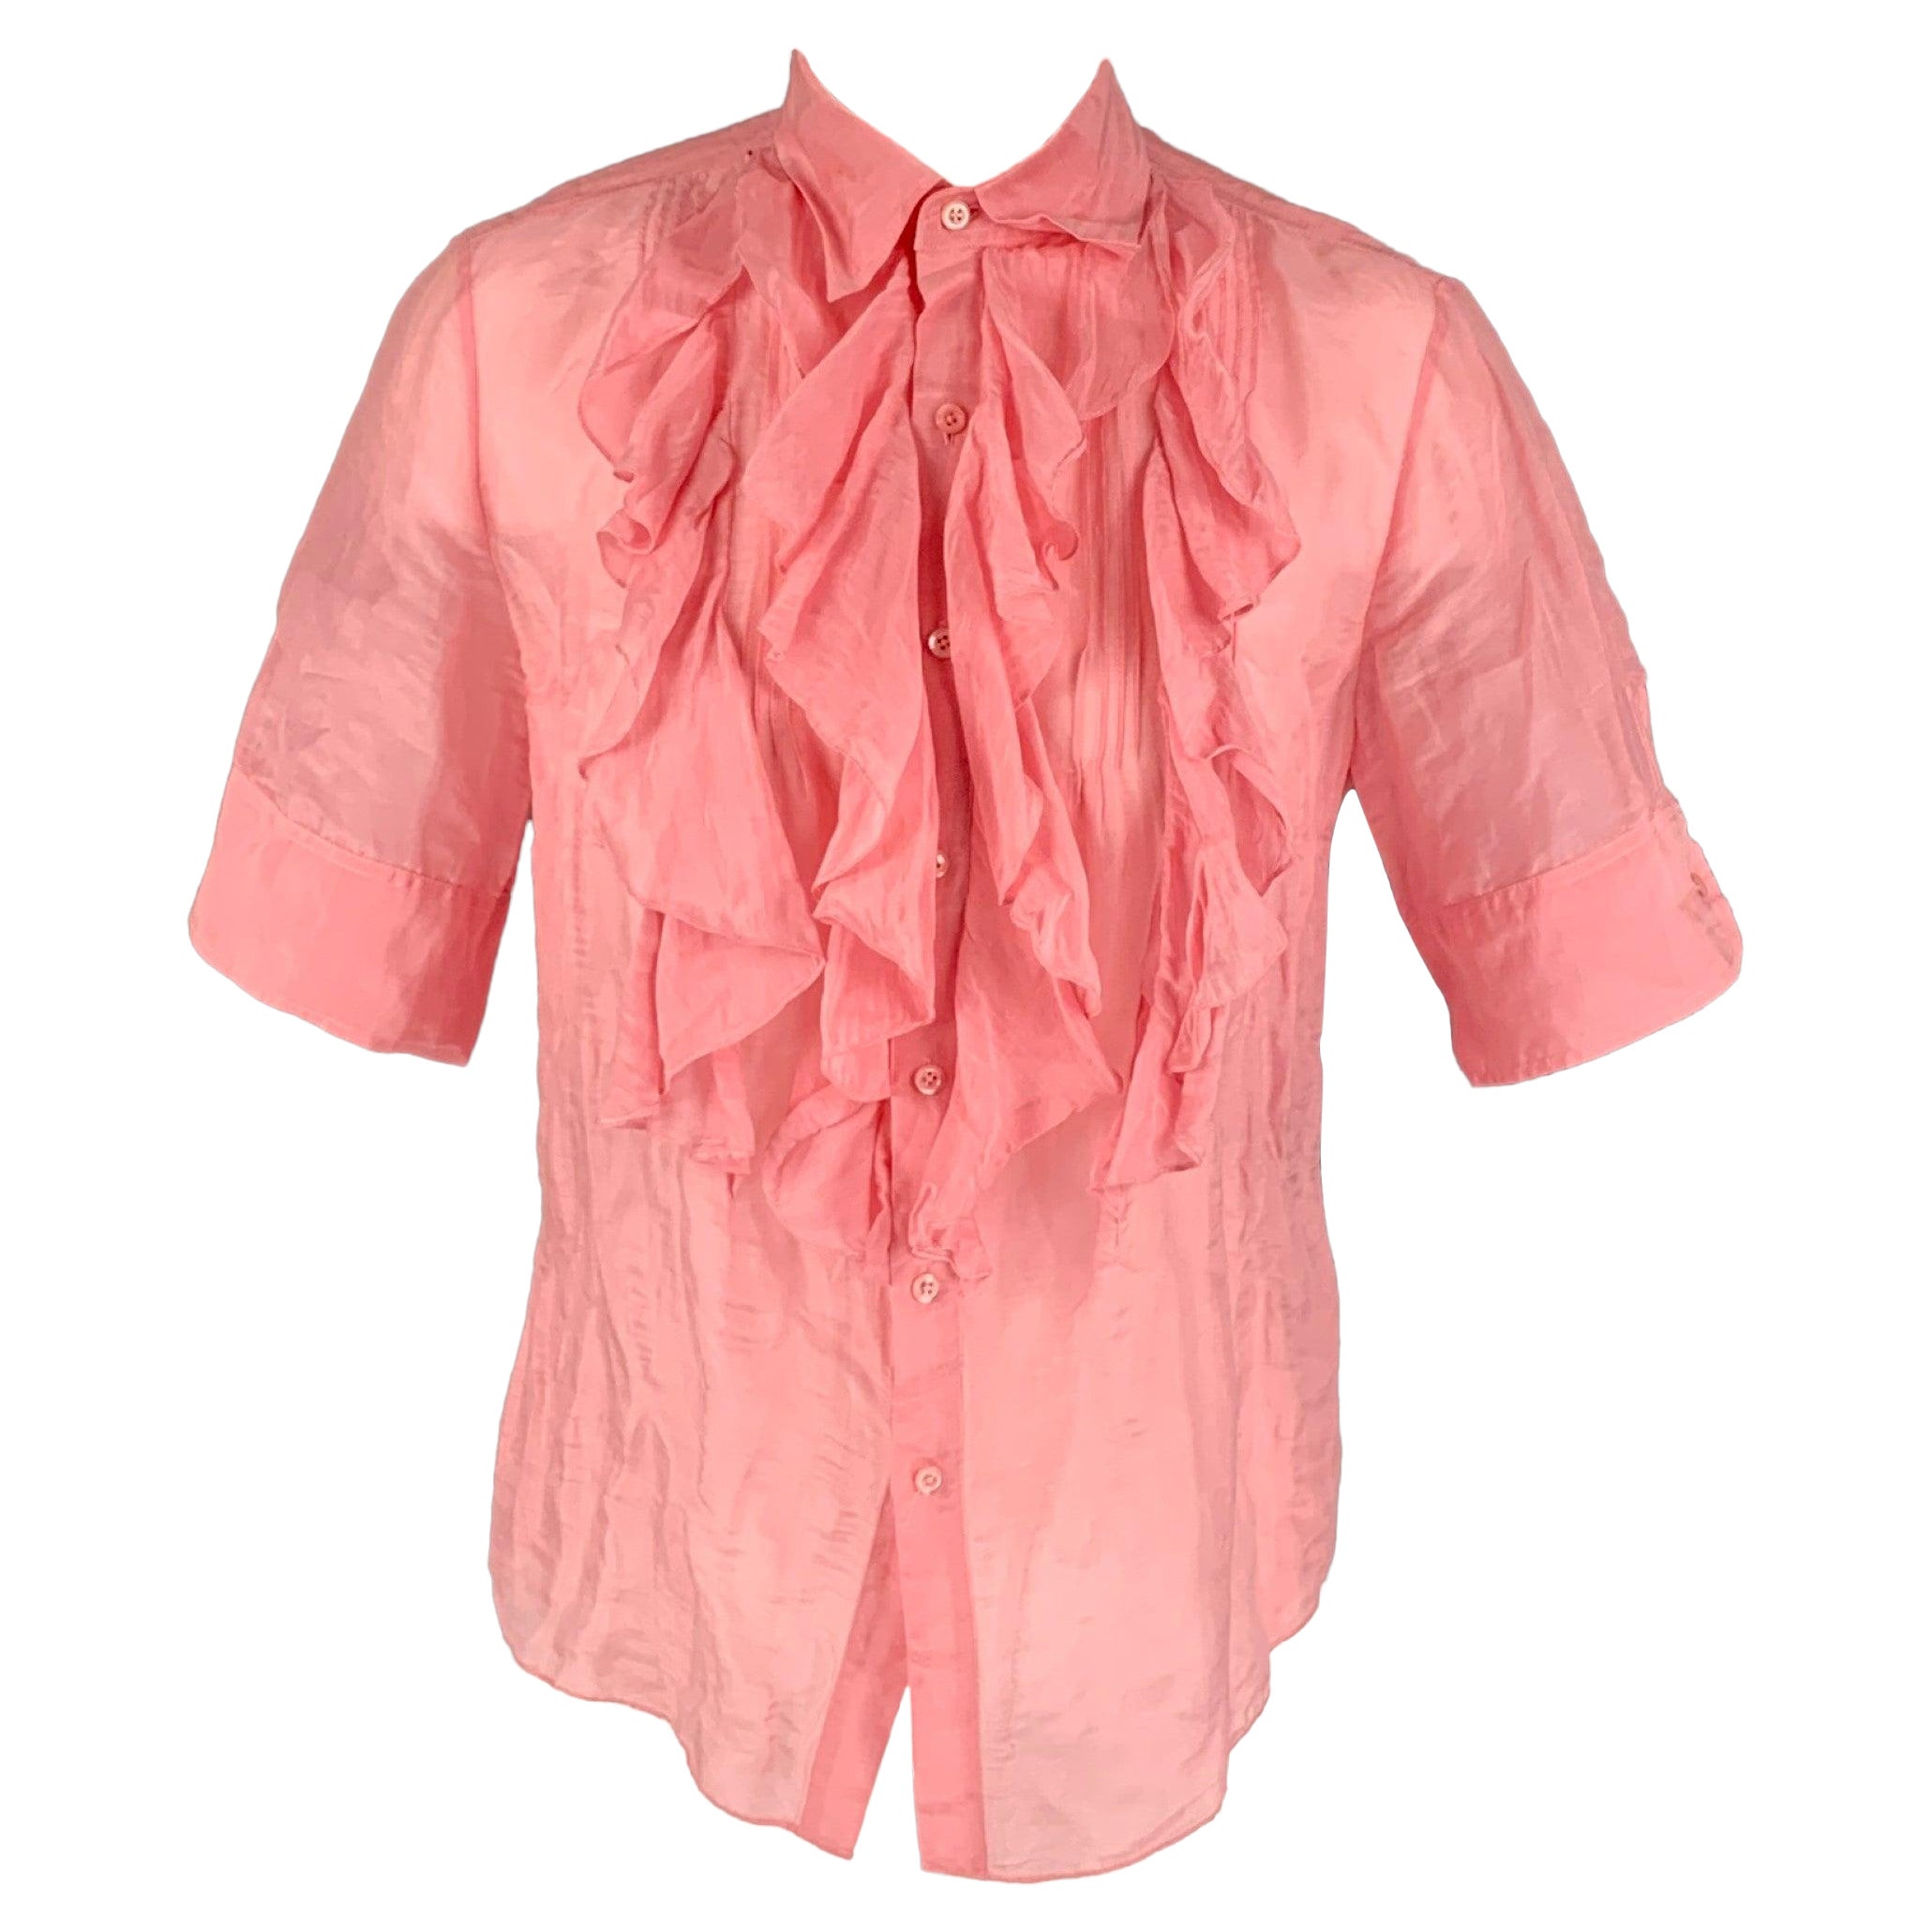 RALPH LAUREN Black Label Size 8 Pink Ruffled Short Sleeve Blouse For Sale